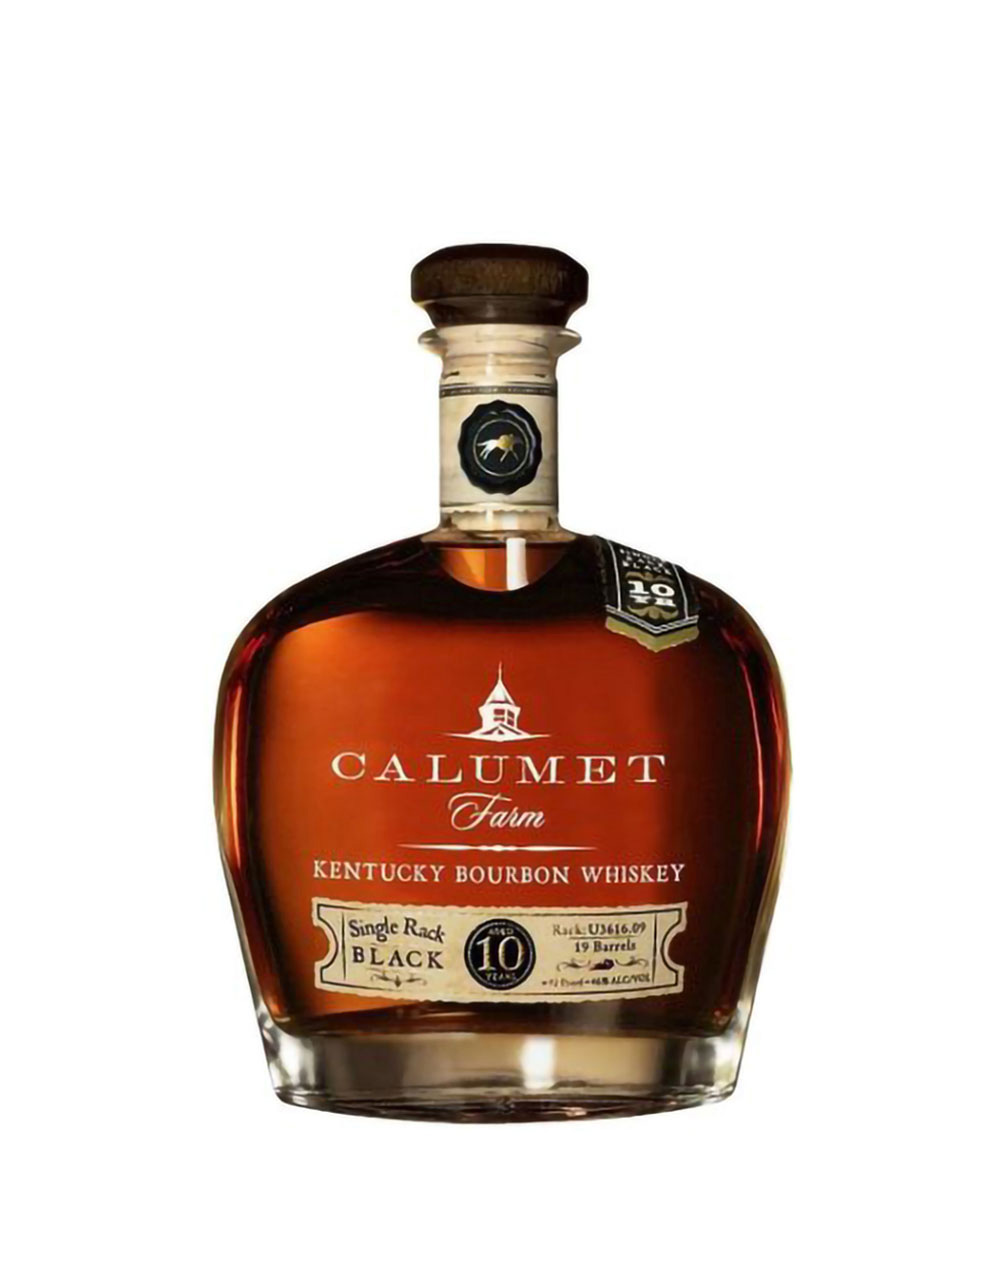 Calumet Farm 10 Year Old Single Rack Black Bourbon Whiskey